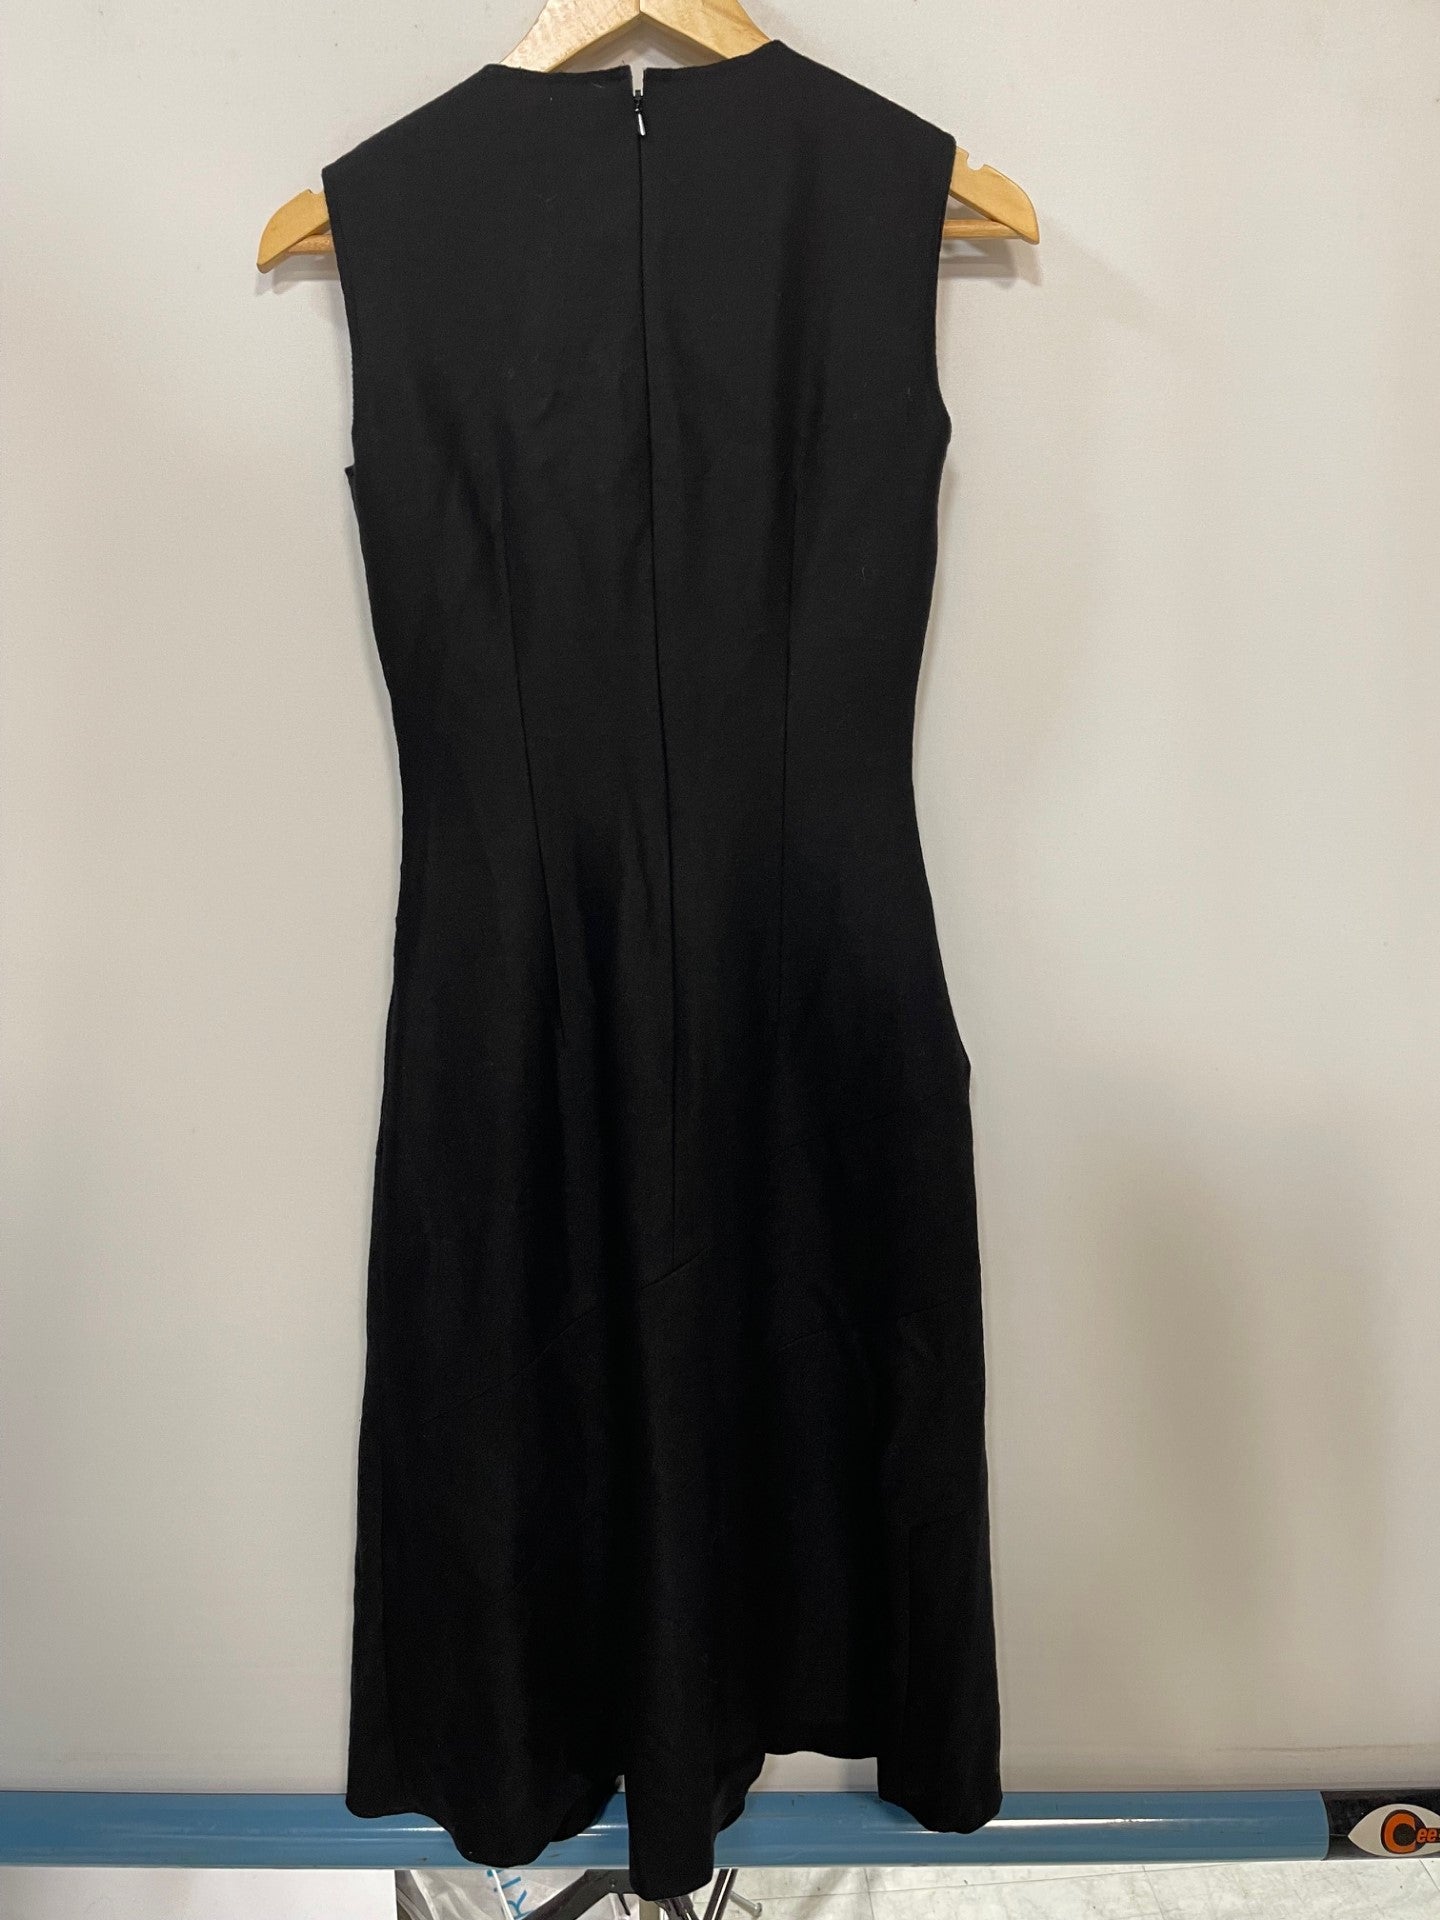 Hobbs Black Wool Blend Dress Size 8